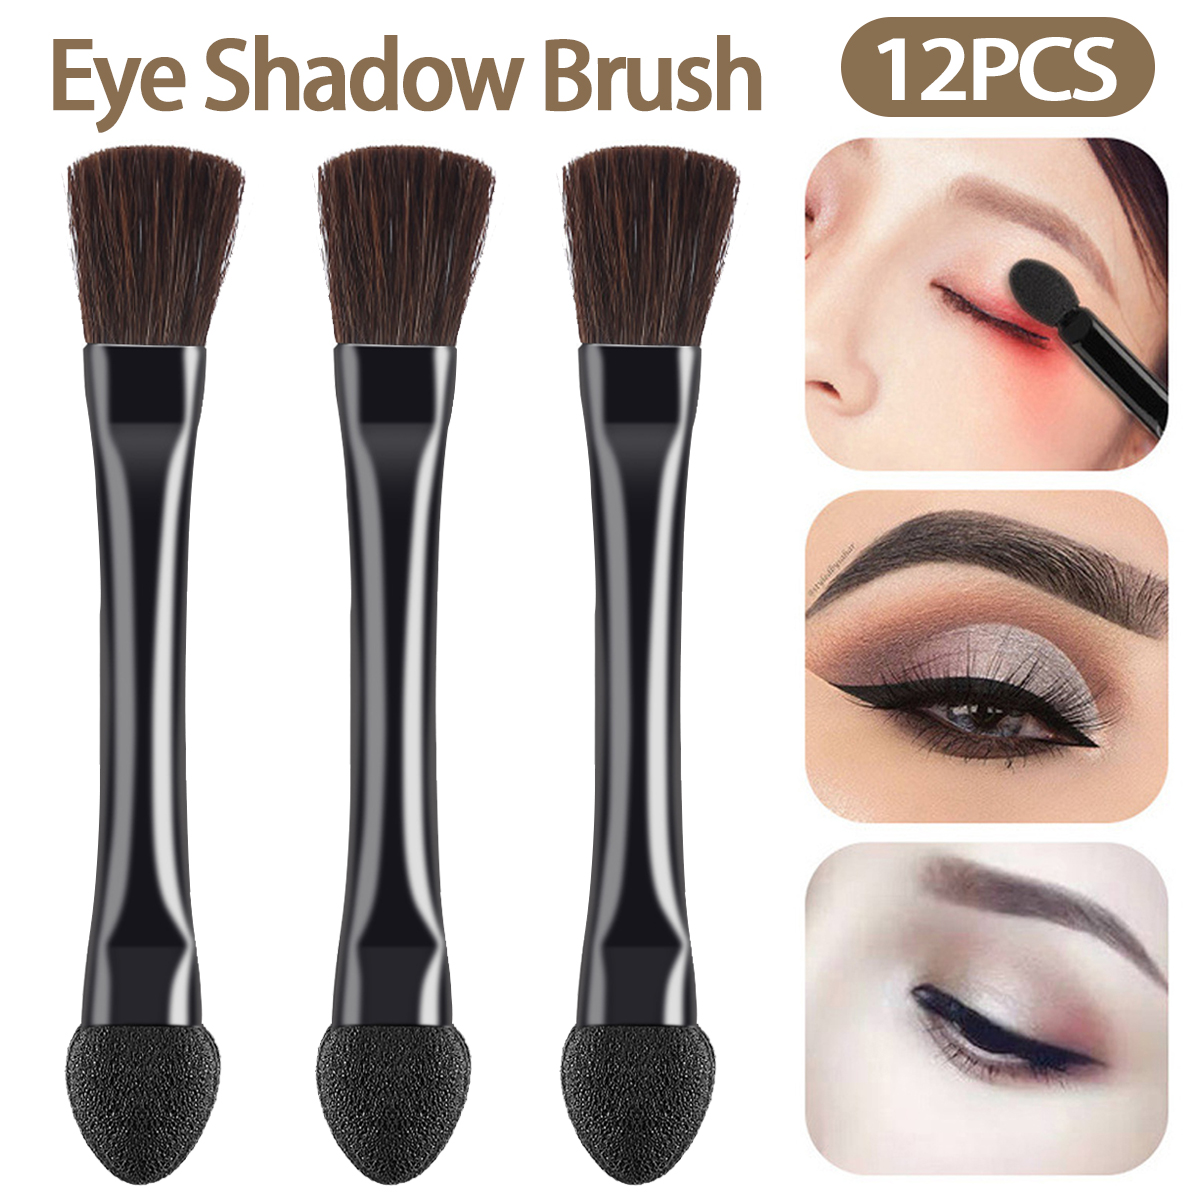 12pcs Disposable Double Ended Eye Shadow Applicators Sponge Brush Makeup Tools